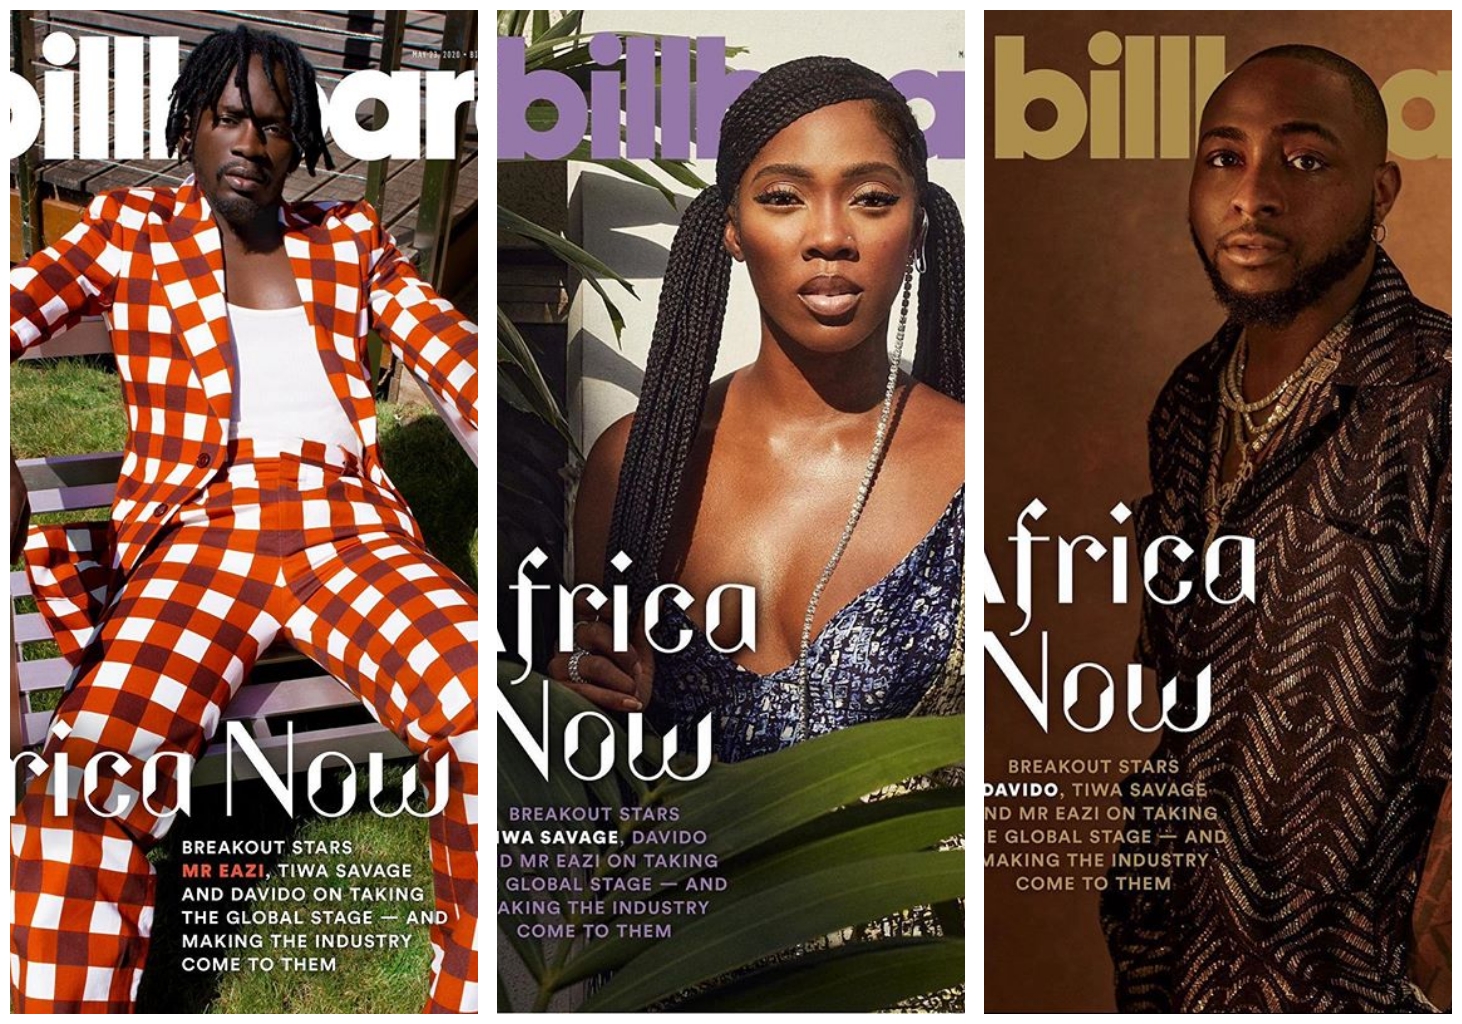 "I dreamt of this" – Davido confess as he covers Billboard Magazine alongside Tiwa Savage and Mr. Eazi (Photos)